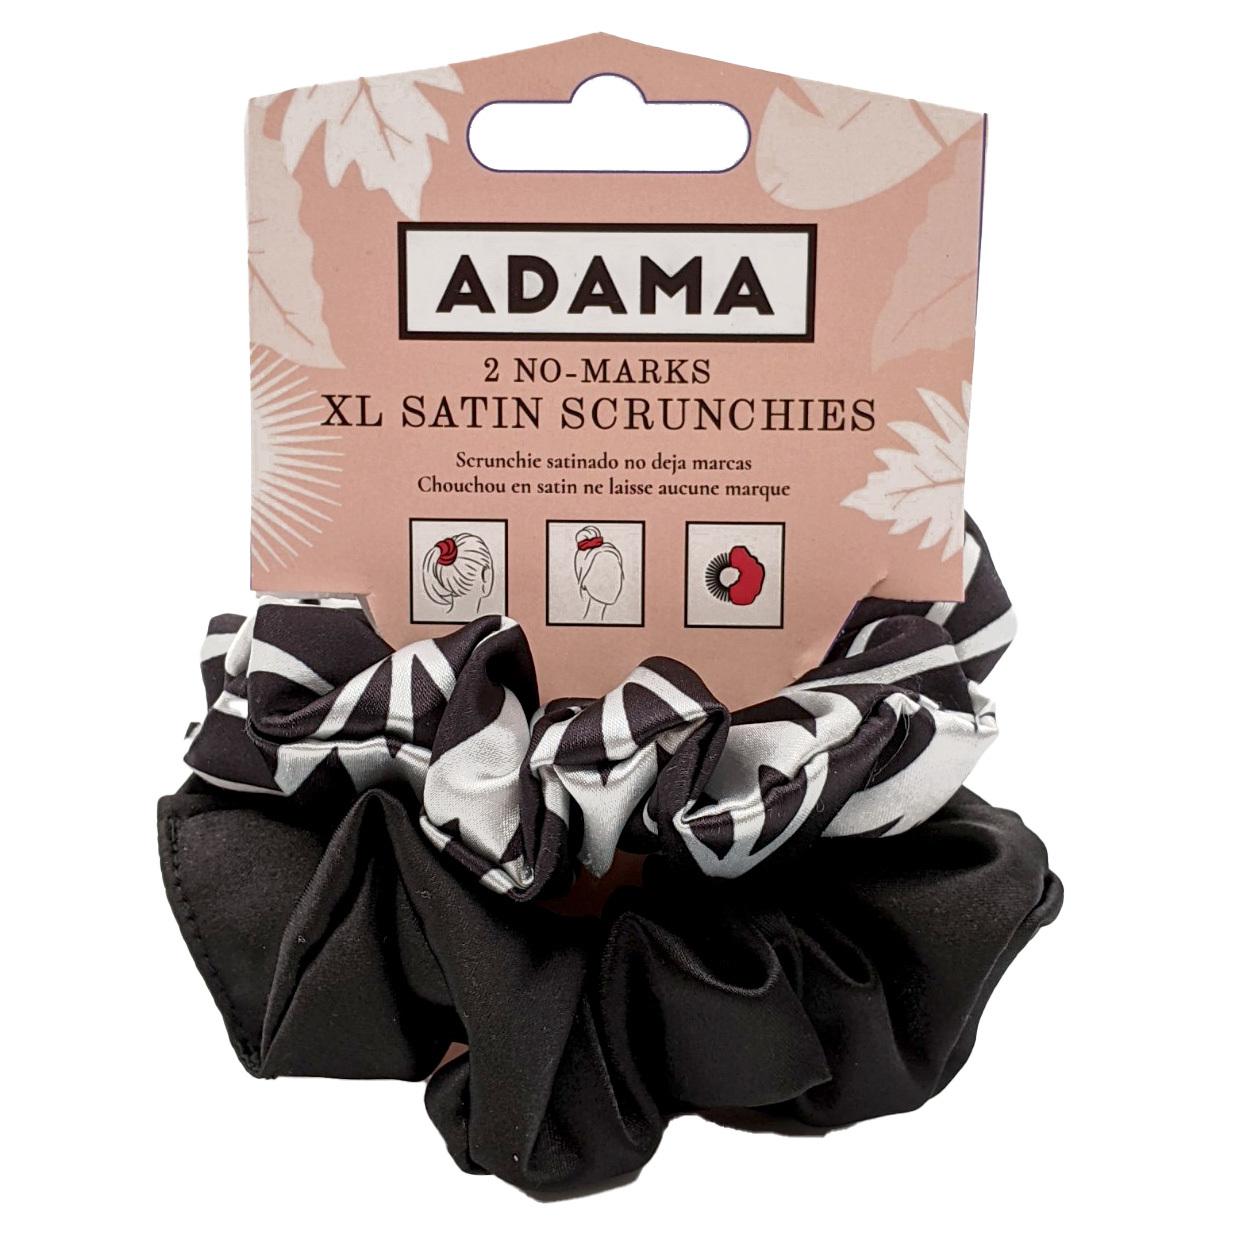 ADAMA Scrunchies - No Marks Satin Scrunchies 2pk